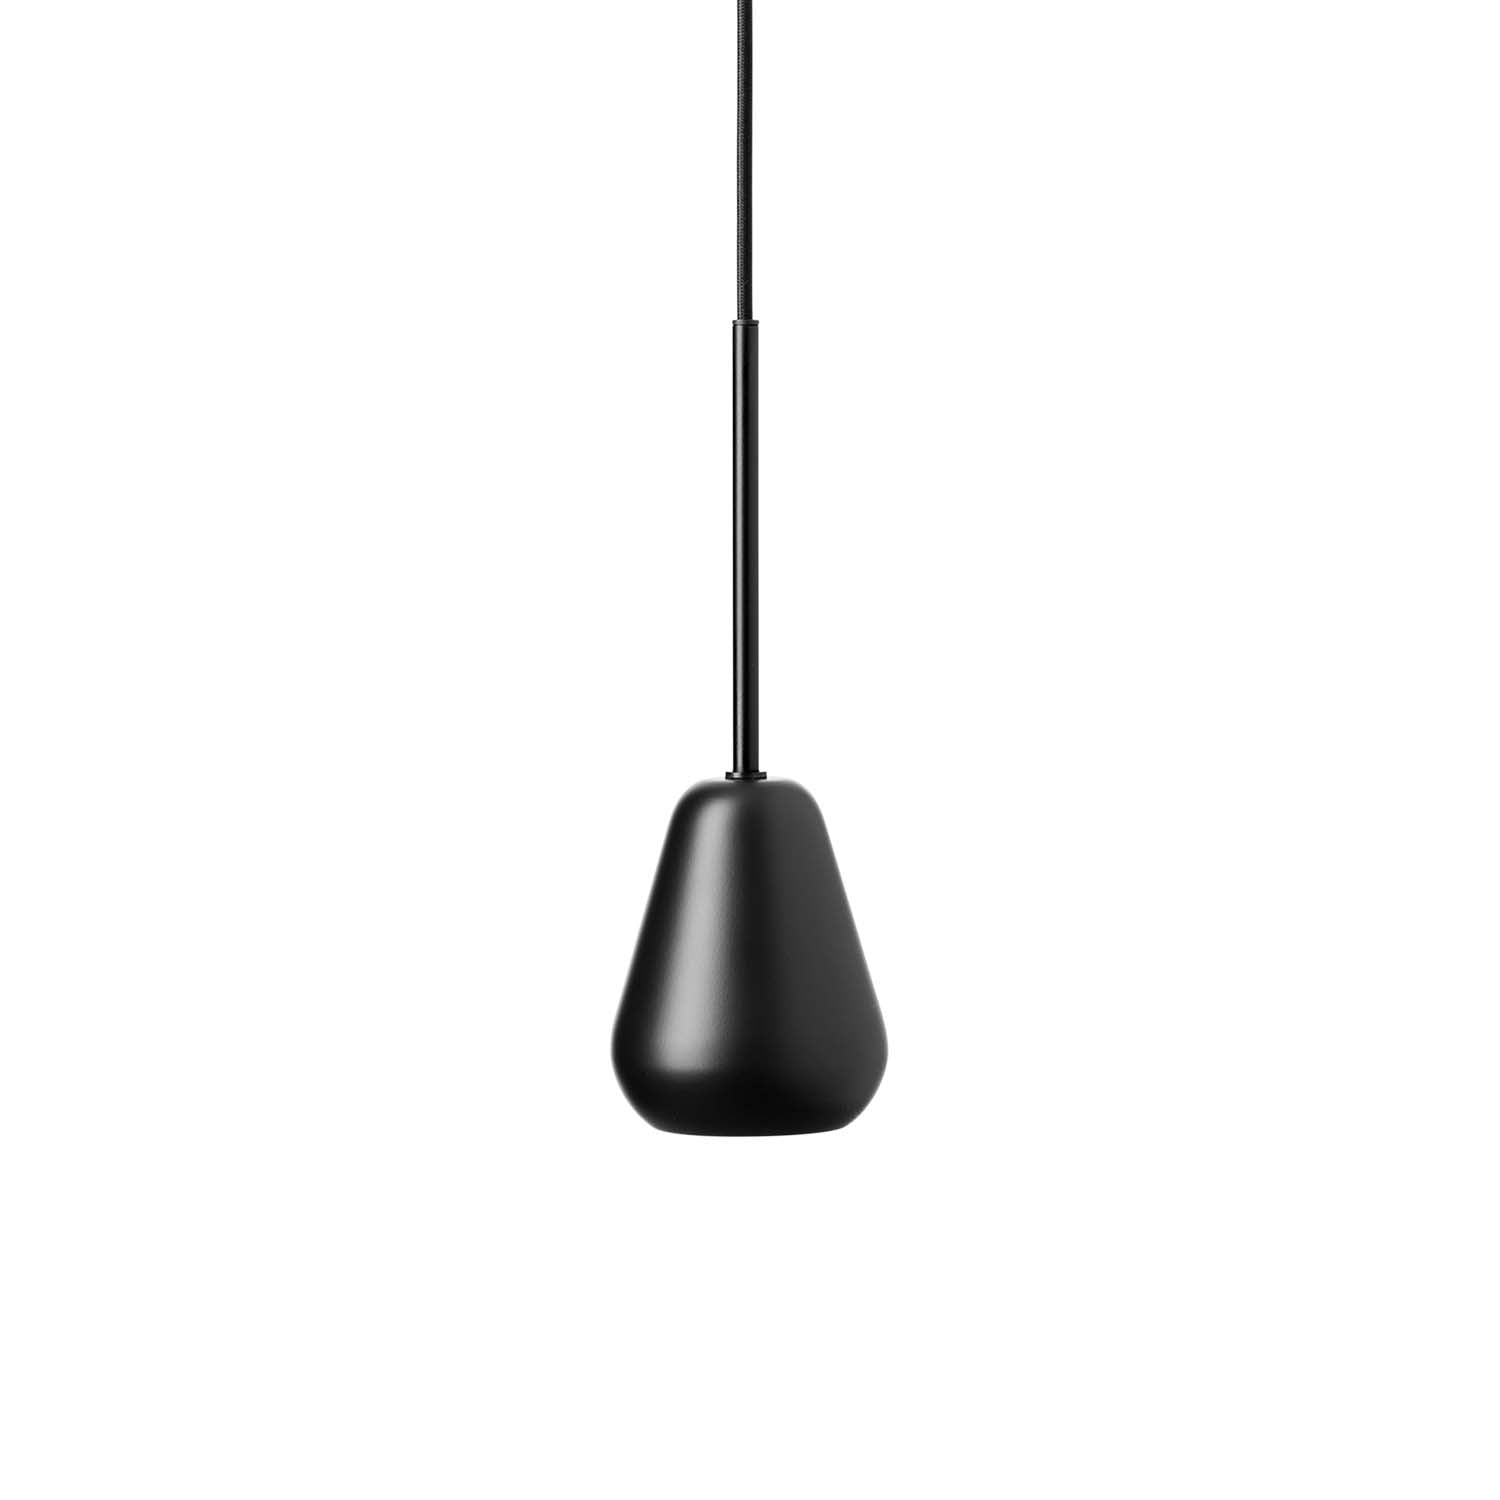 ANOLI SPOT - Small, minimalist and designer pendant light